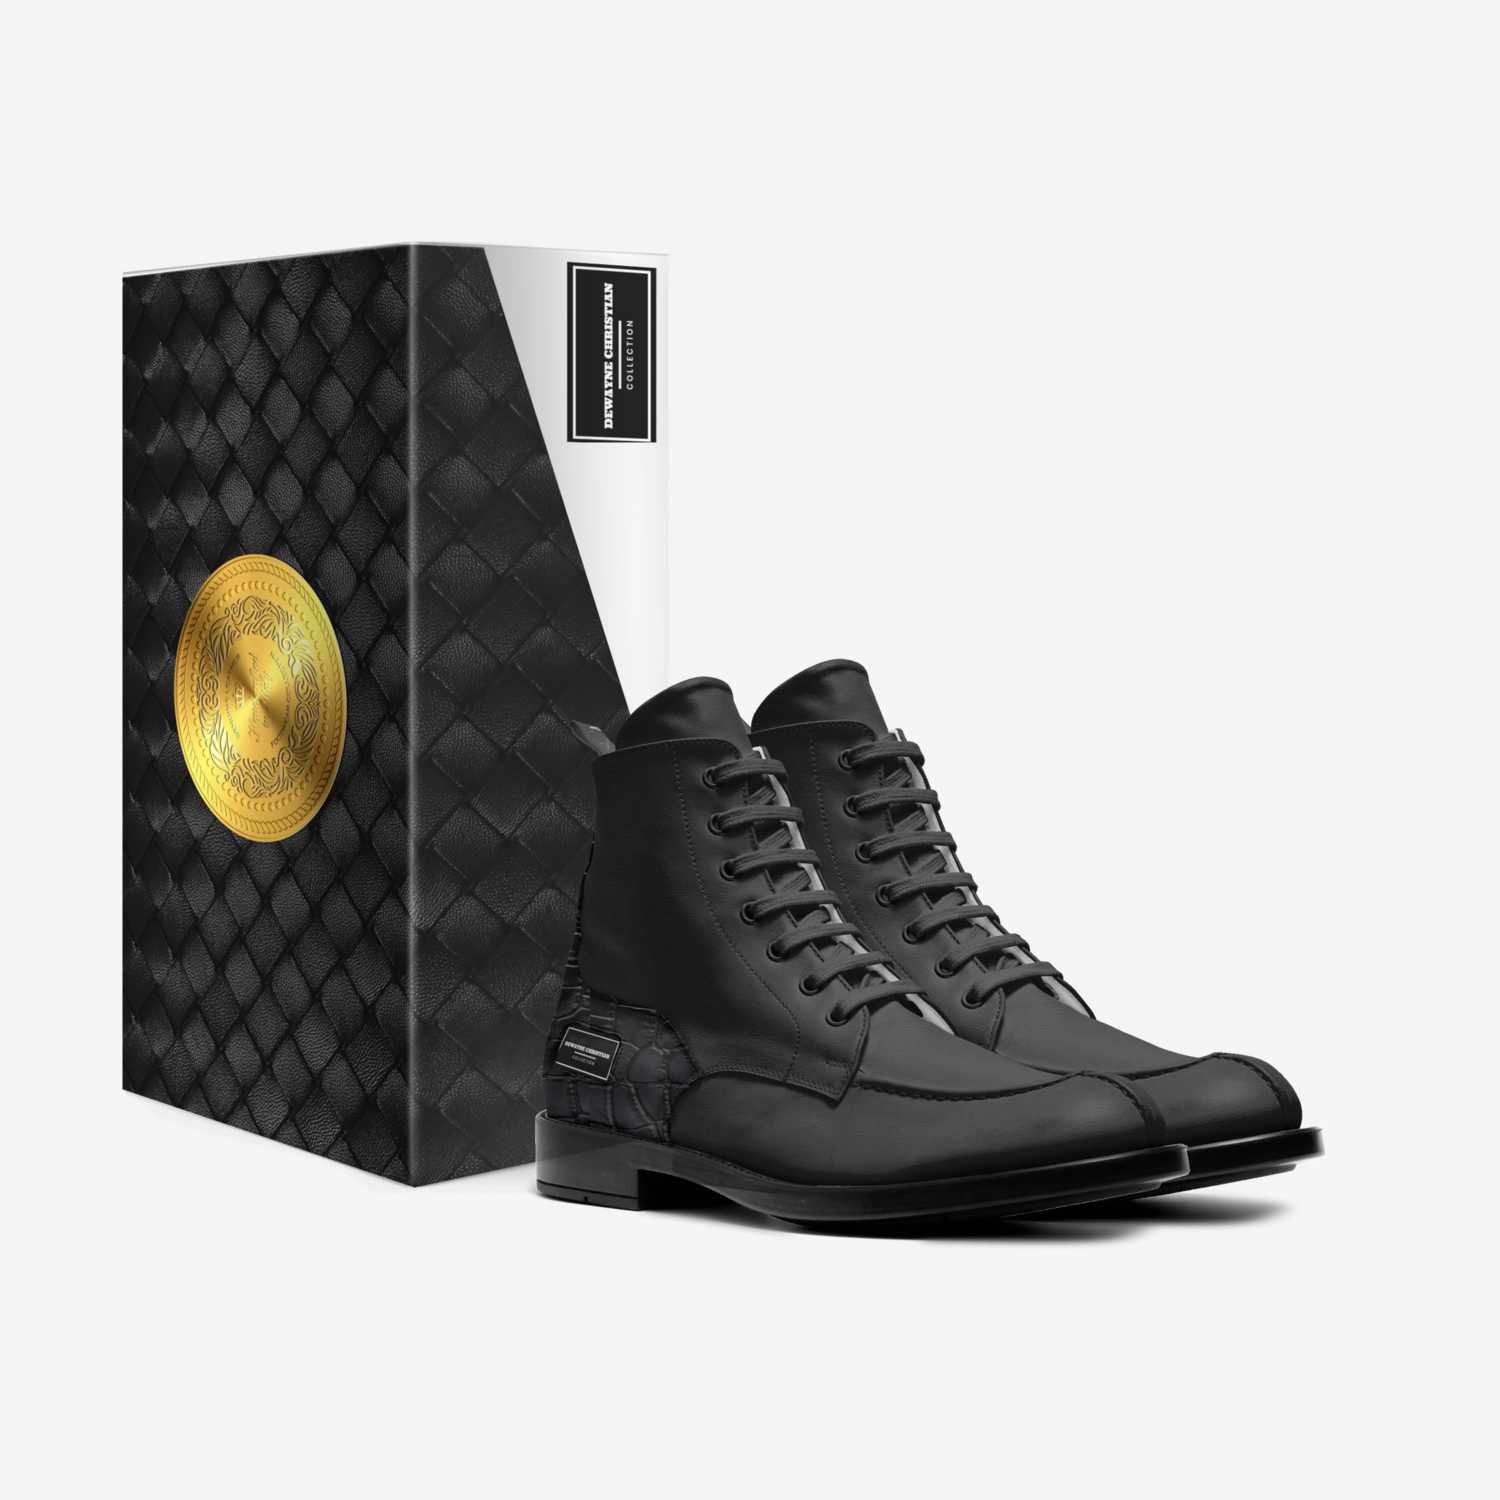 DeWayne Christian  custom made in Italy shoes by Dewayne Christian | Box view